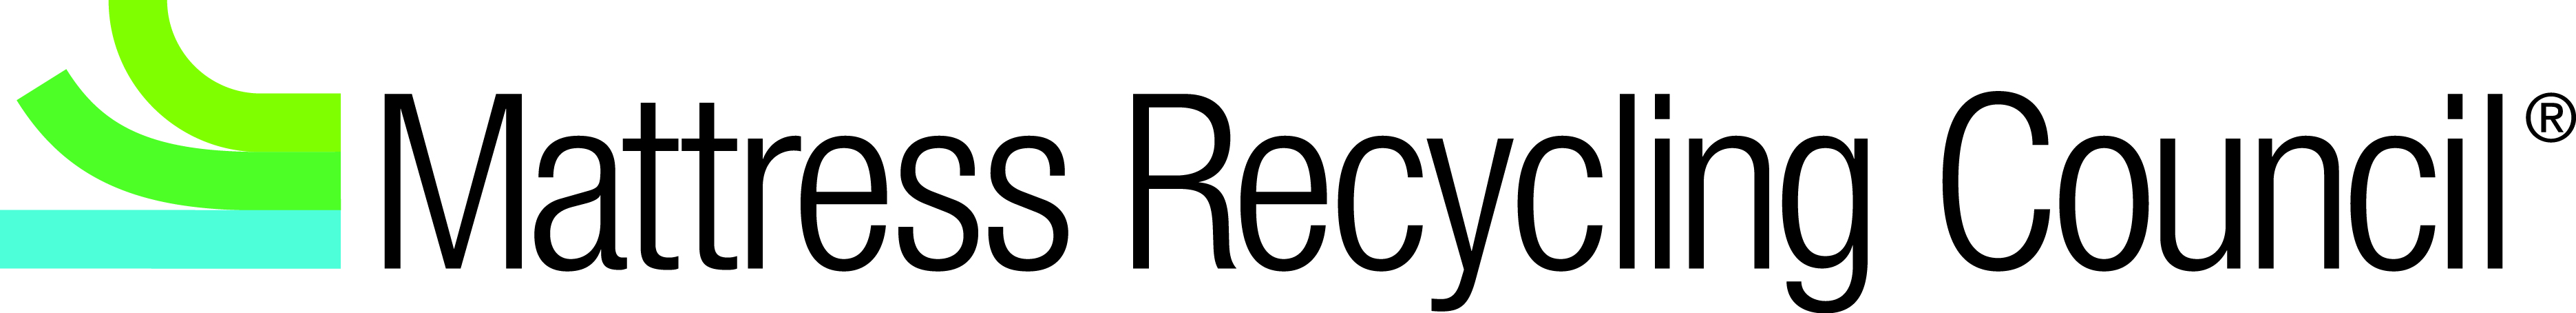 Mattress Recycling Council logo